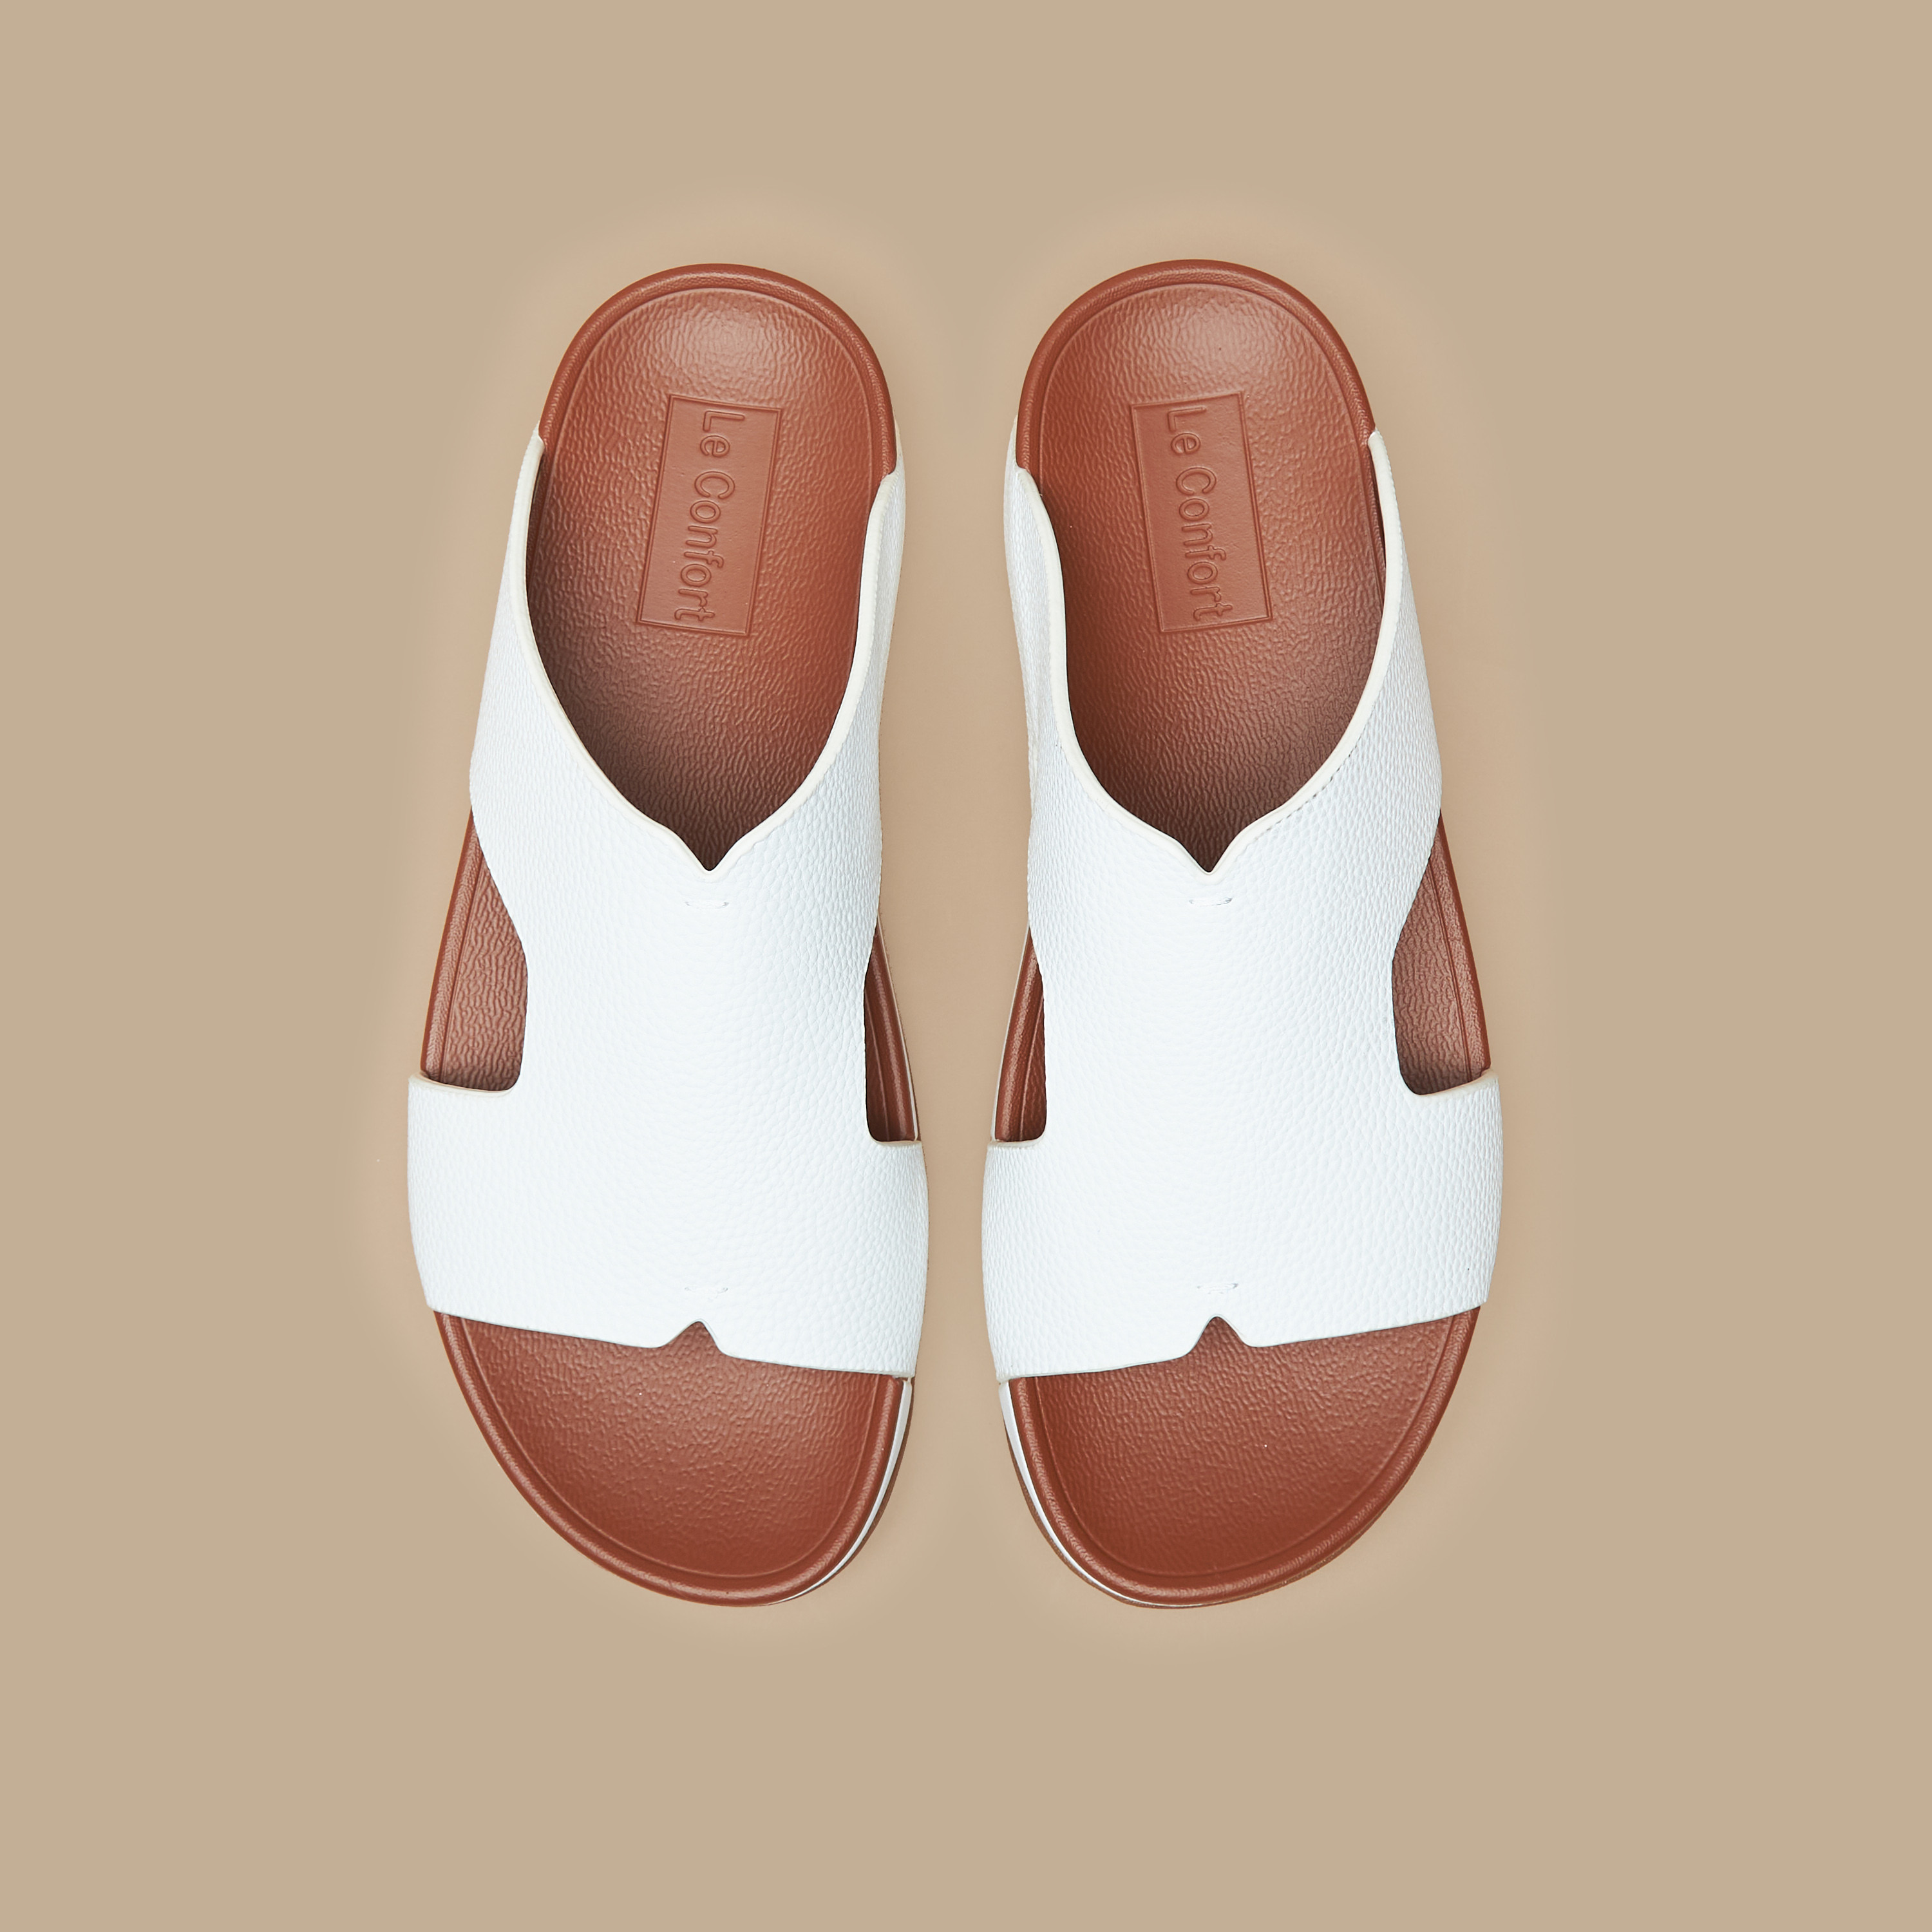 Men's Sandals: Casual & Comfortable Sandals for Men | Crocs